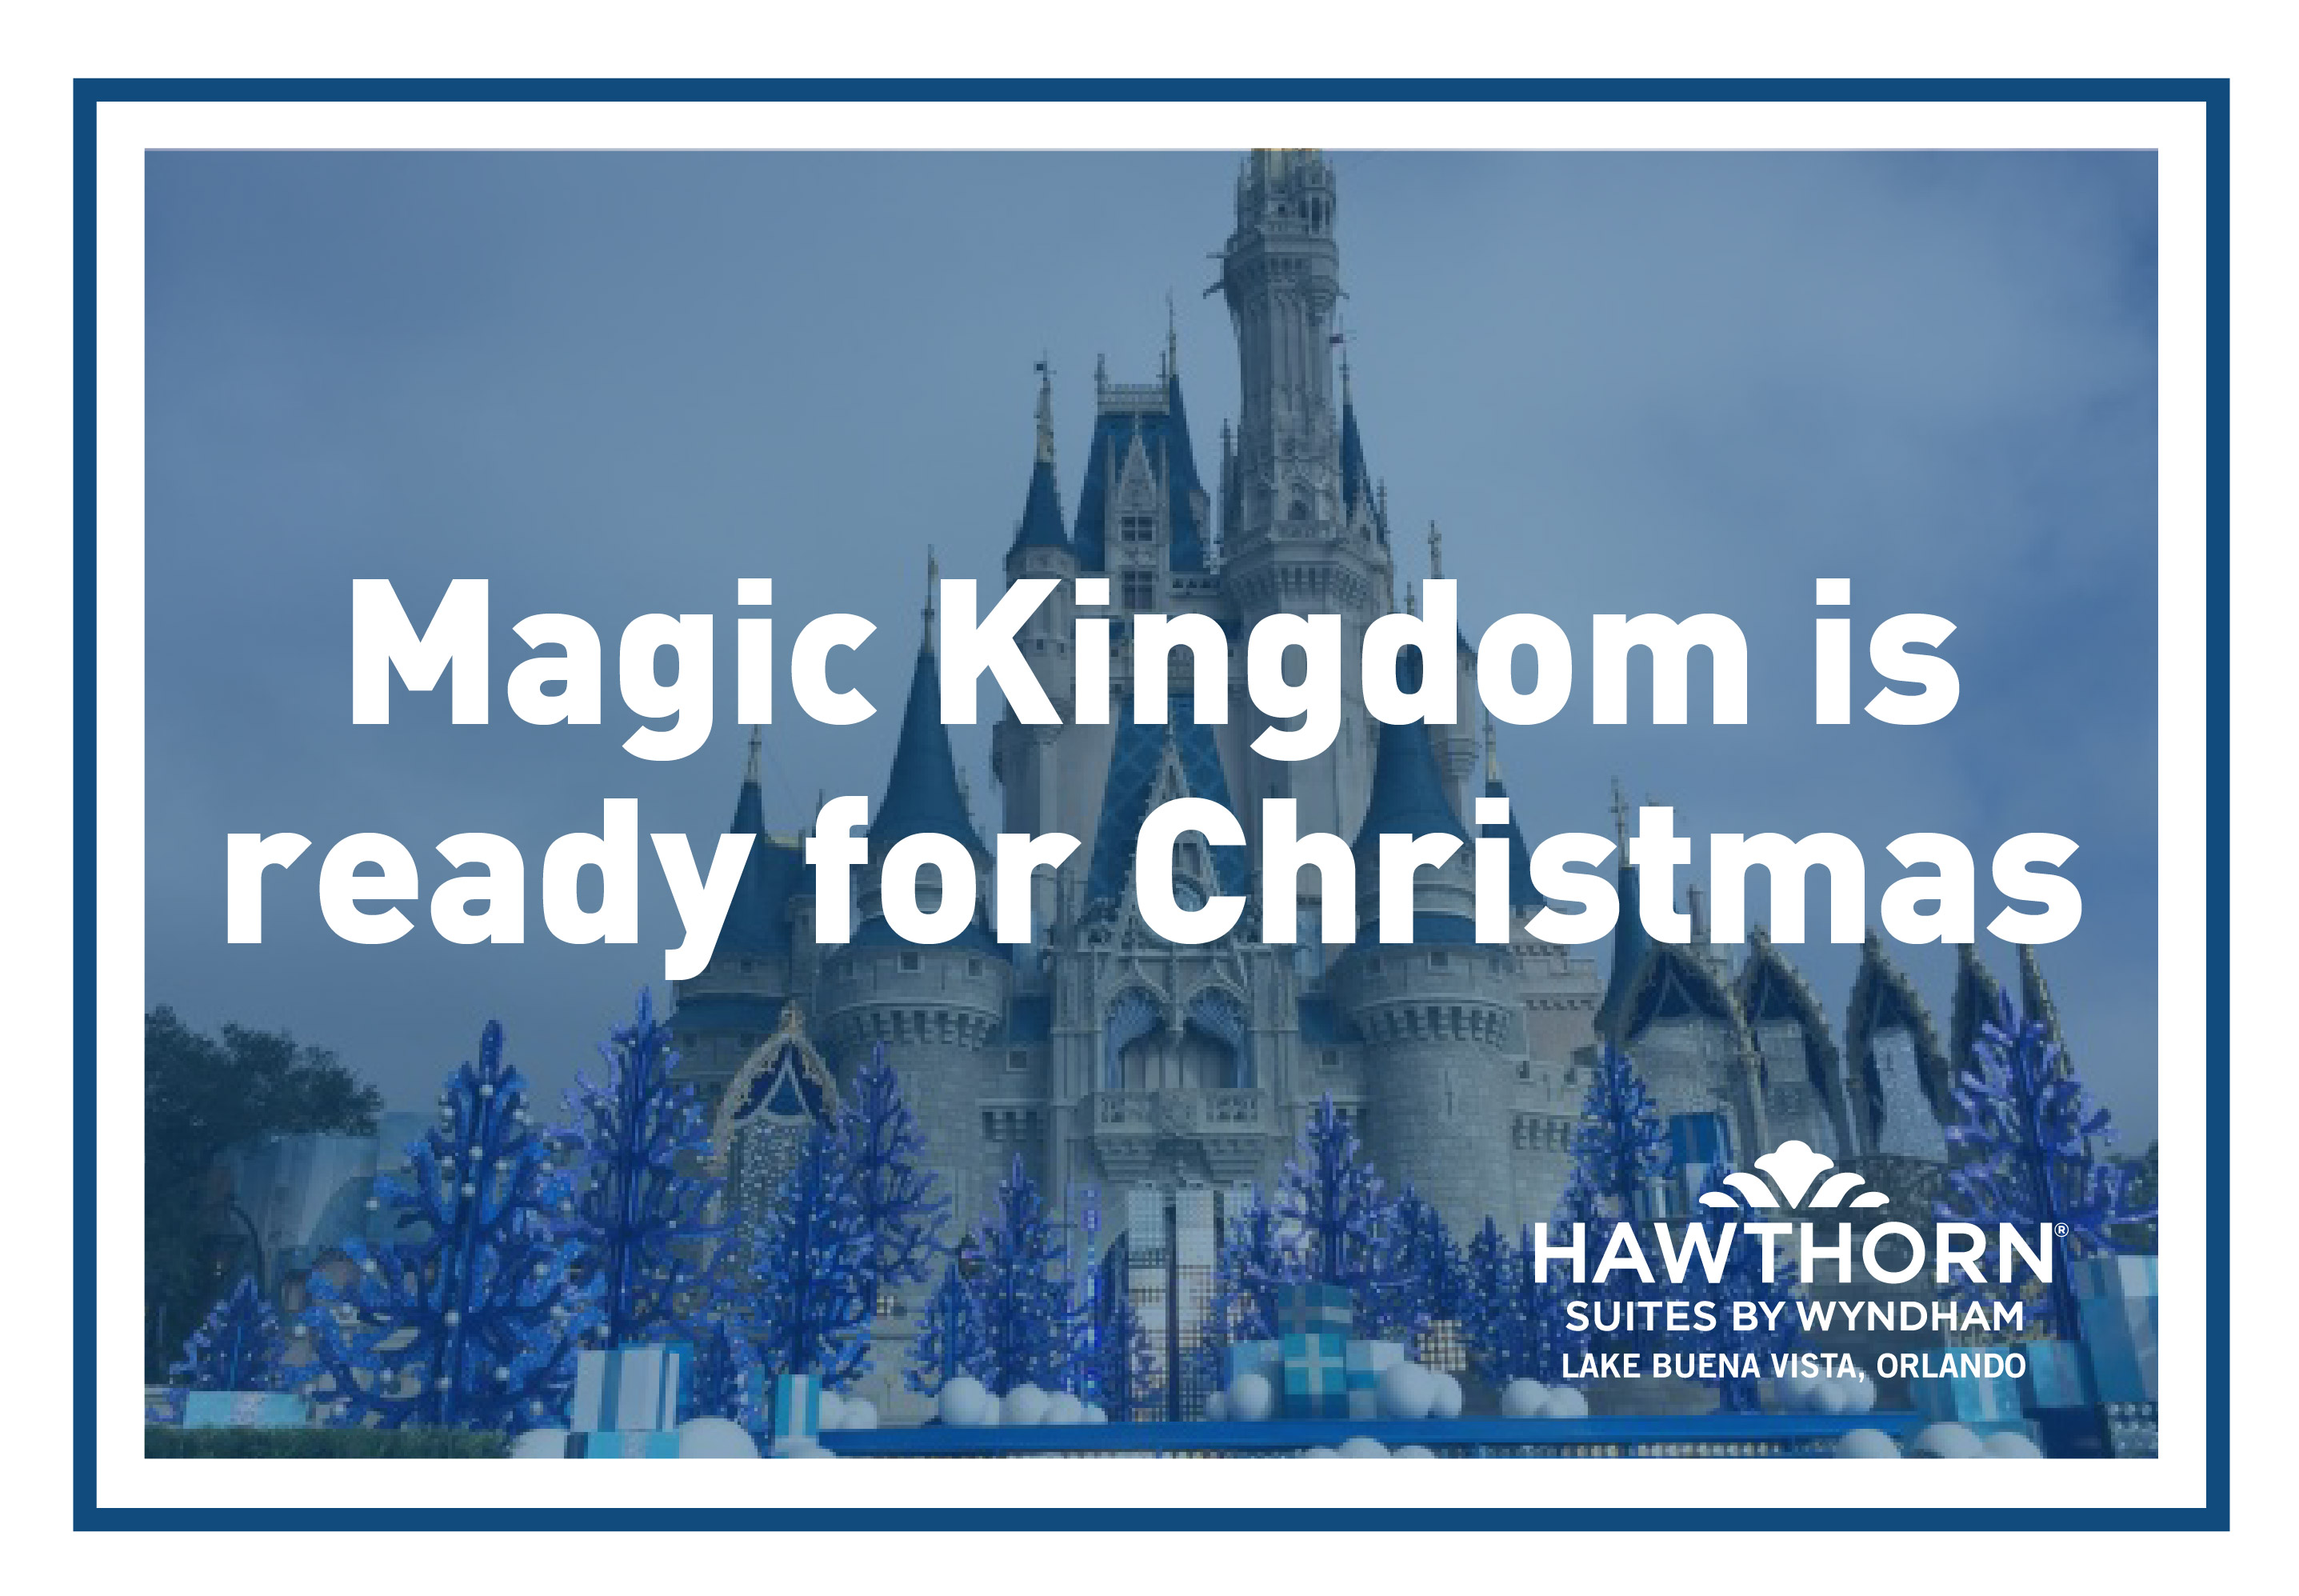 Magic Kingdom is ready for Christmas - Hawthorn Suites By Wyndham Lake Buena Vista, Orlando